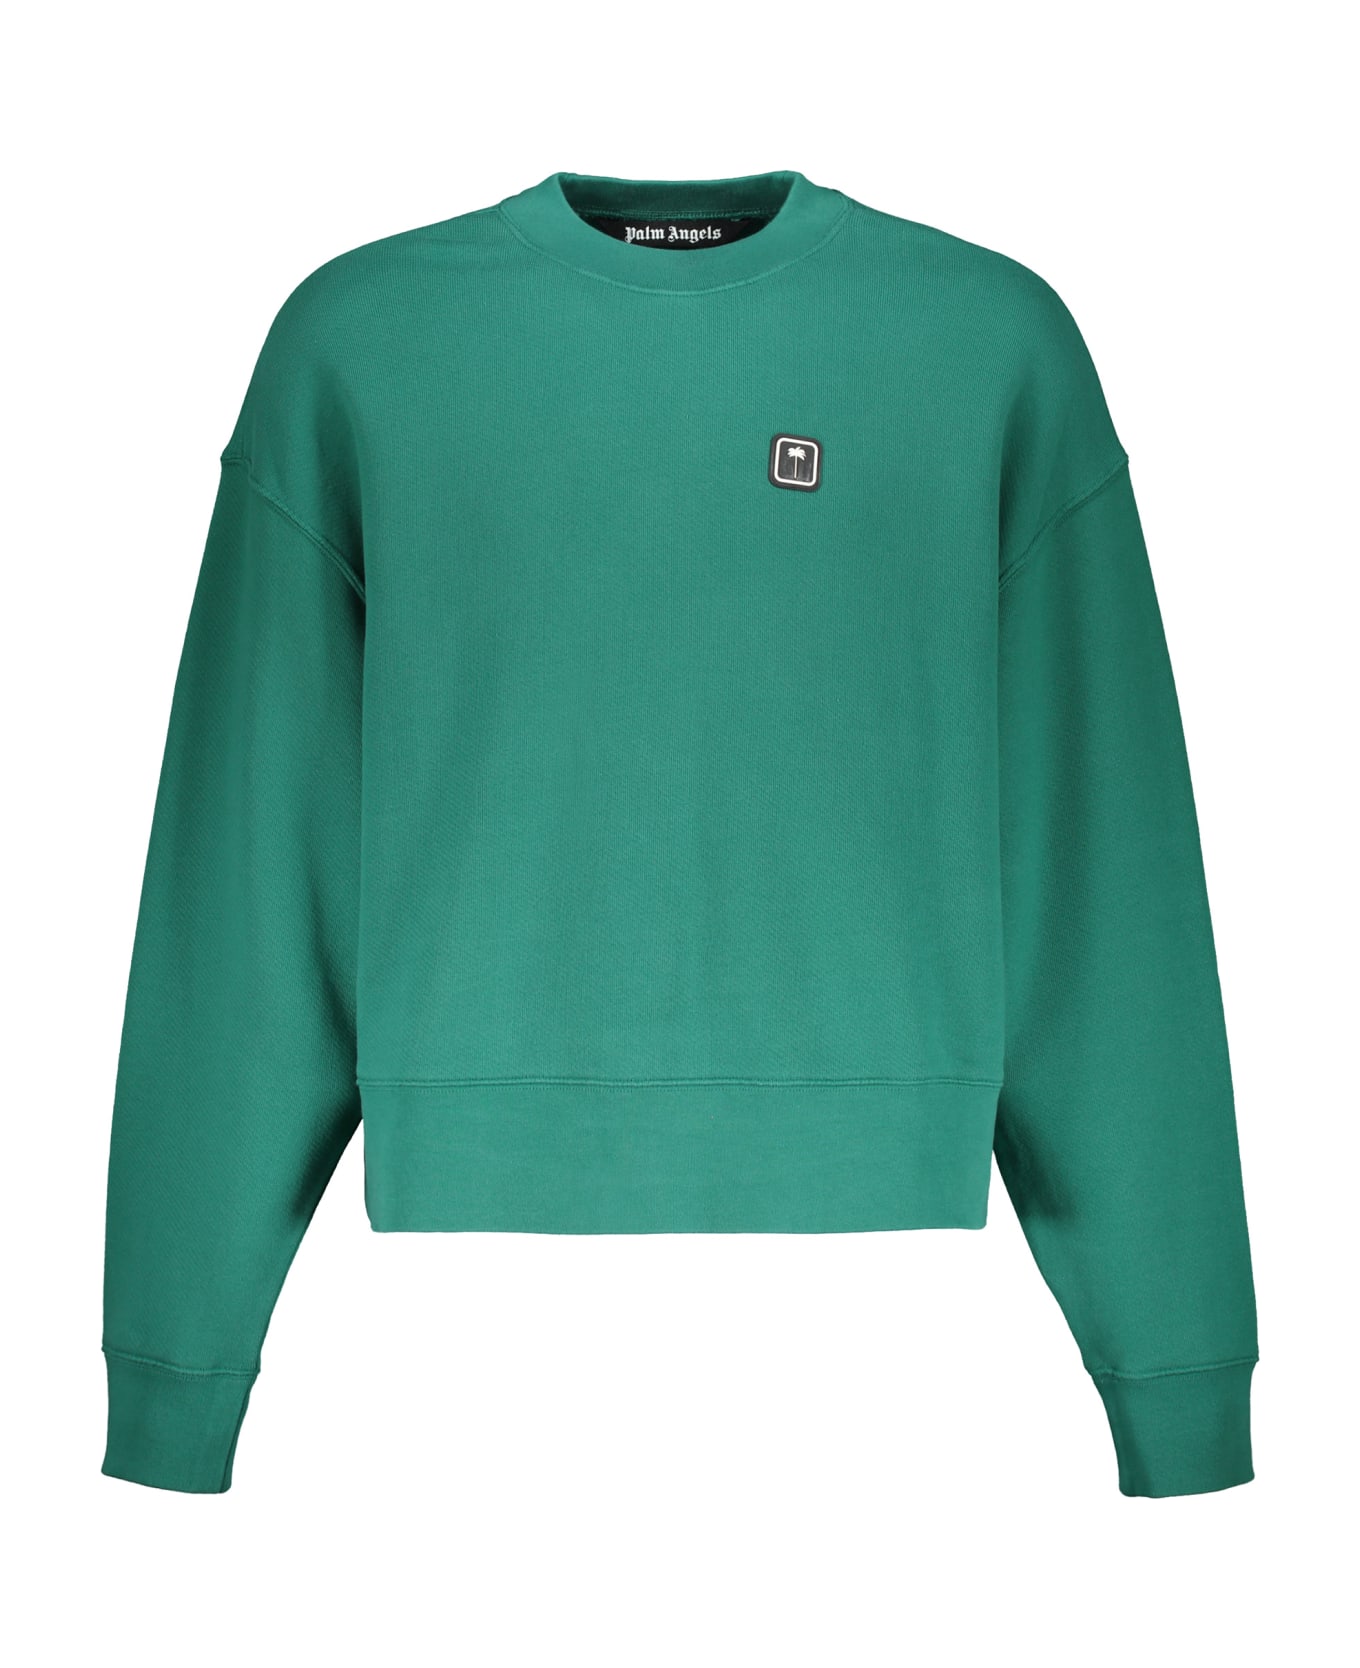 Palm Angels Cotton Sweatshirt - green フリース